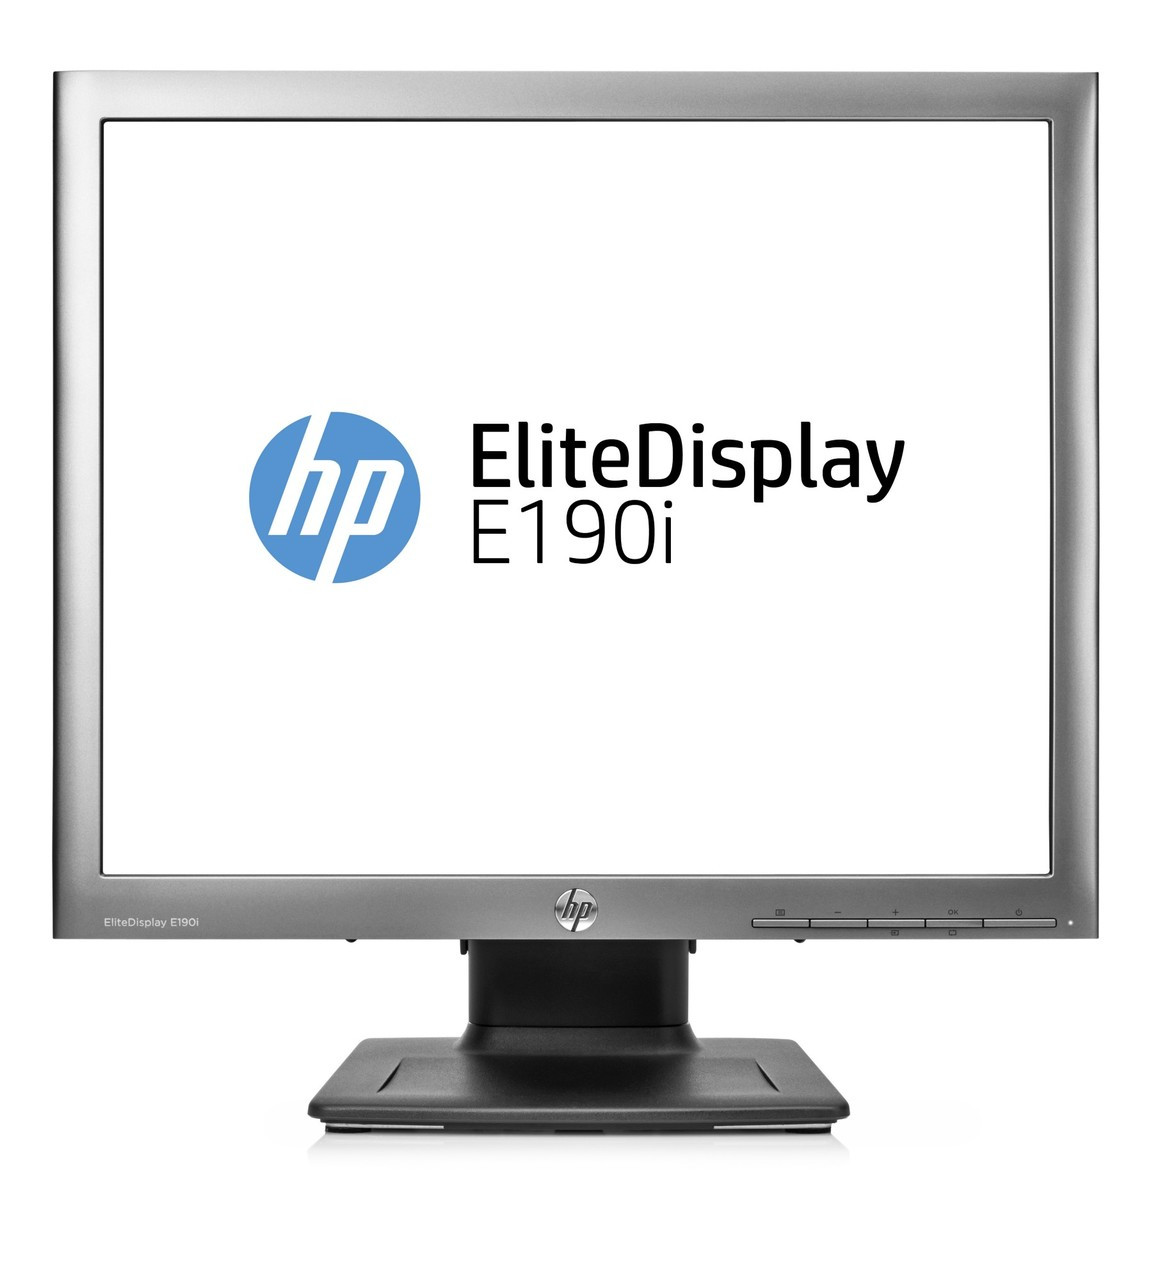 HP EliteDisplay E190i 18.9-in 5:4 LED Backlit IPS Monitor (ENERGY STAR) computer monitor